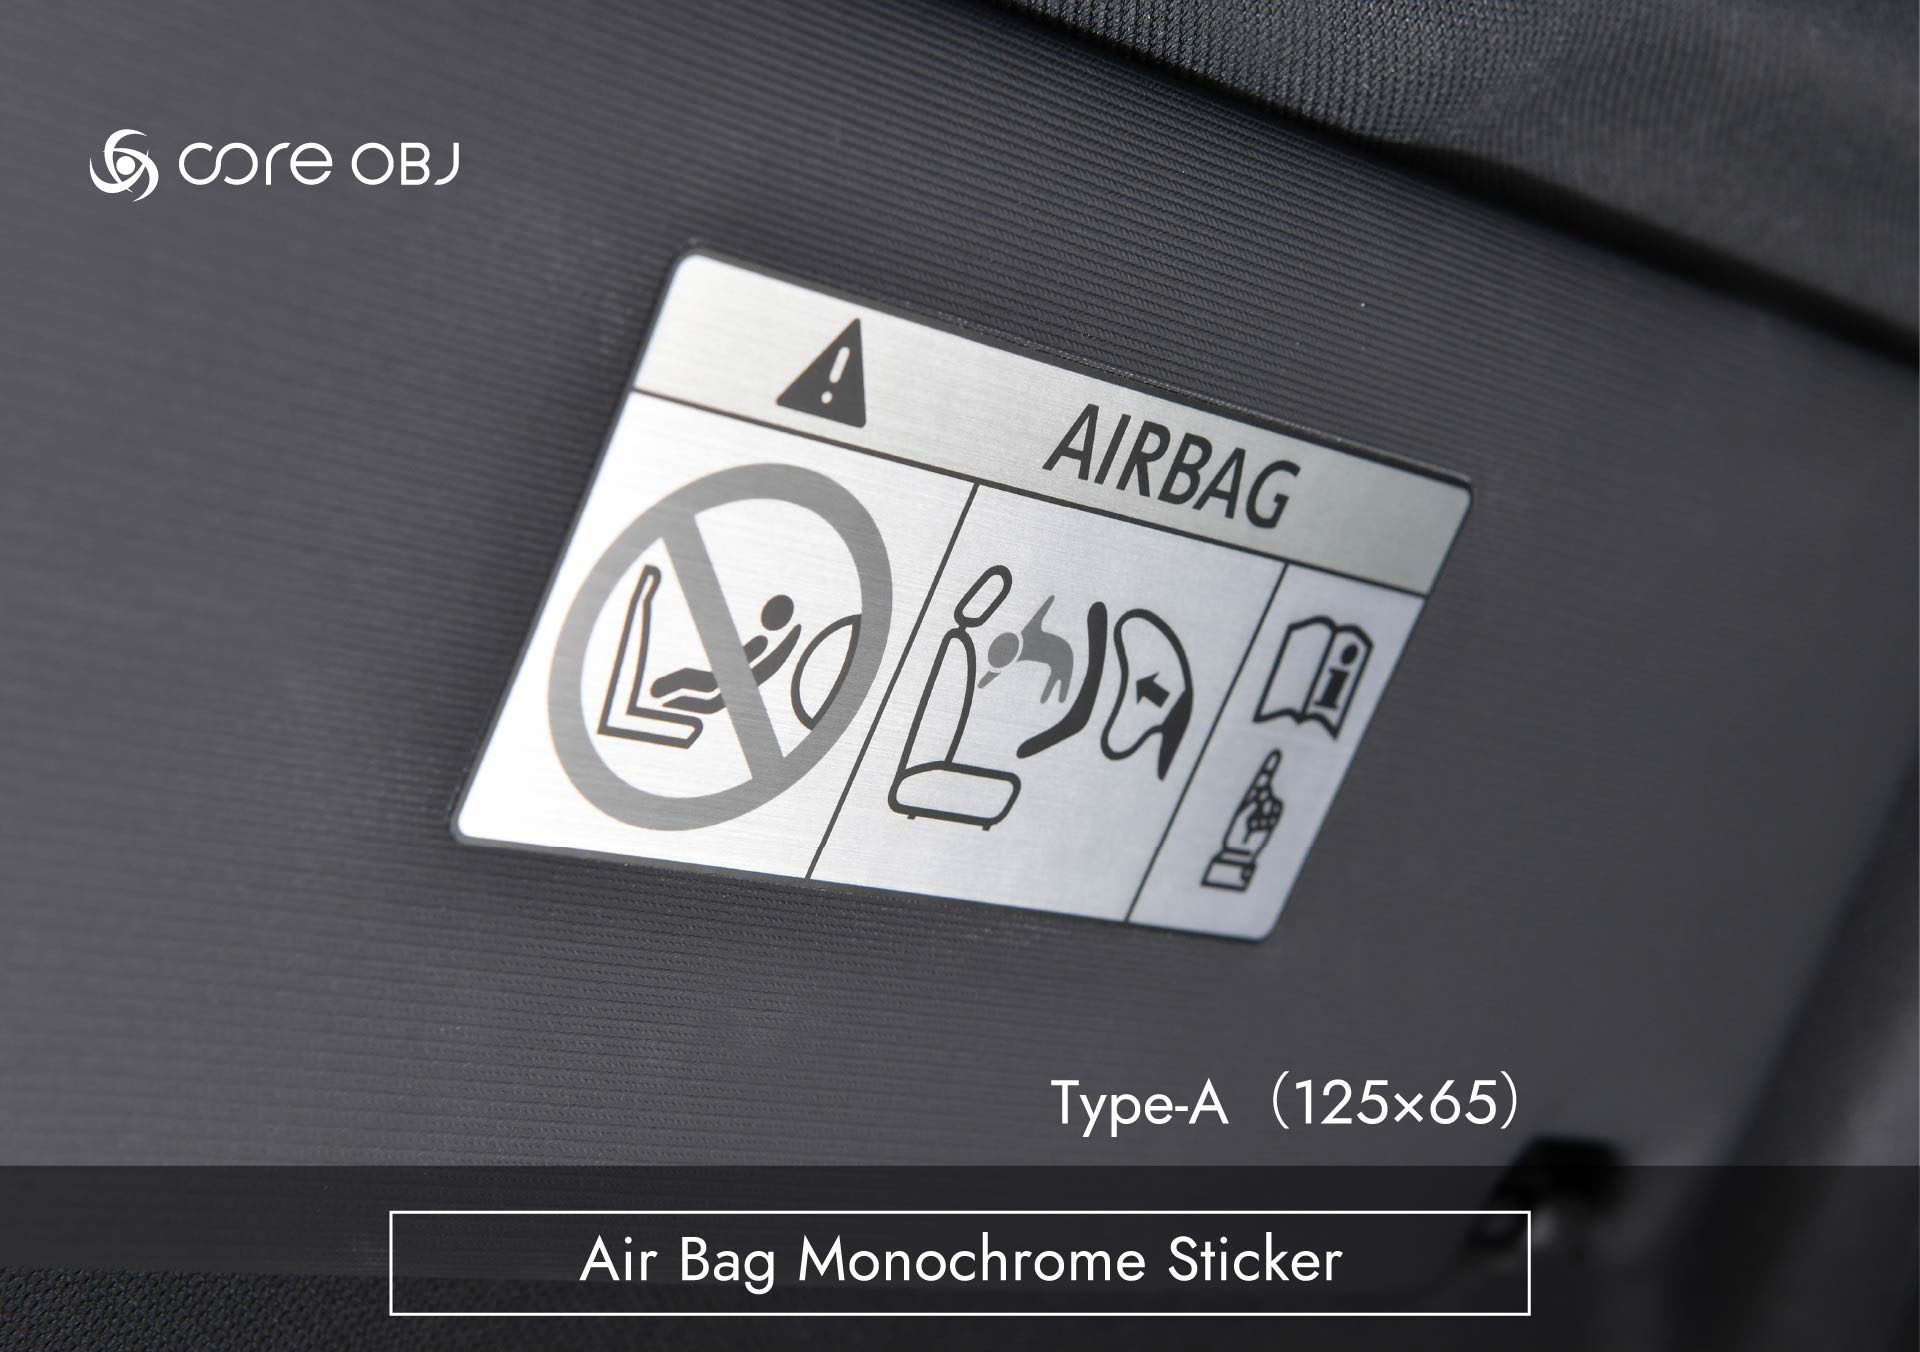 core OBJ Air Bag Monochrome Sticker Type-A